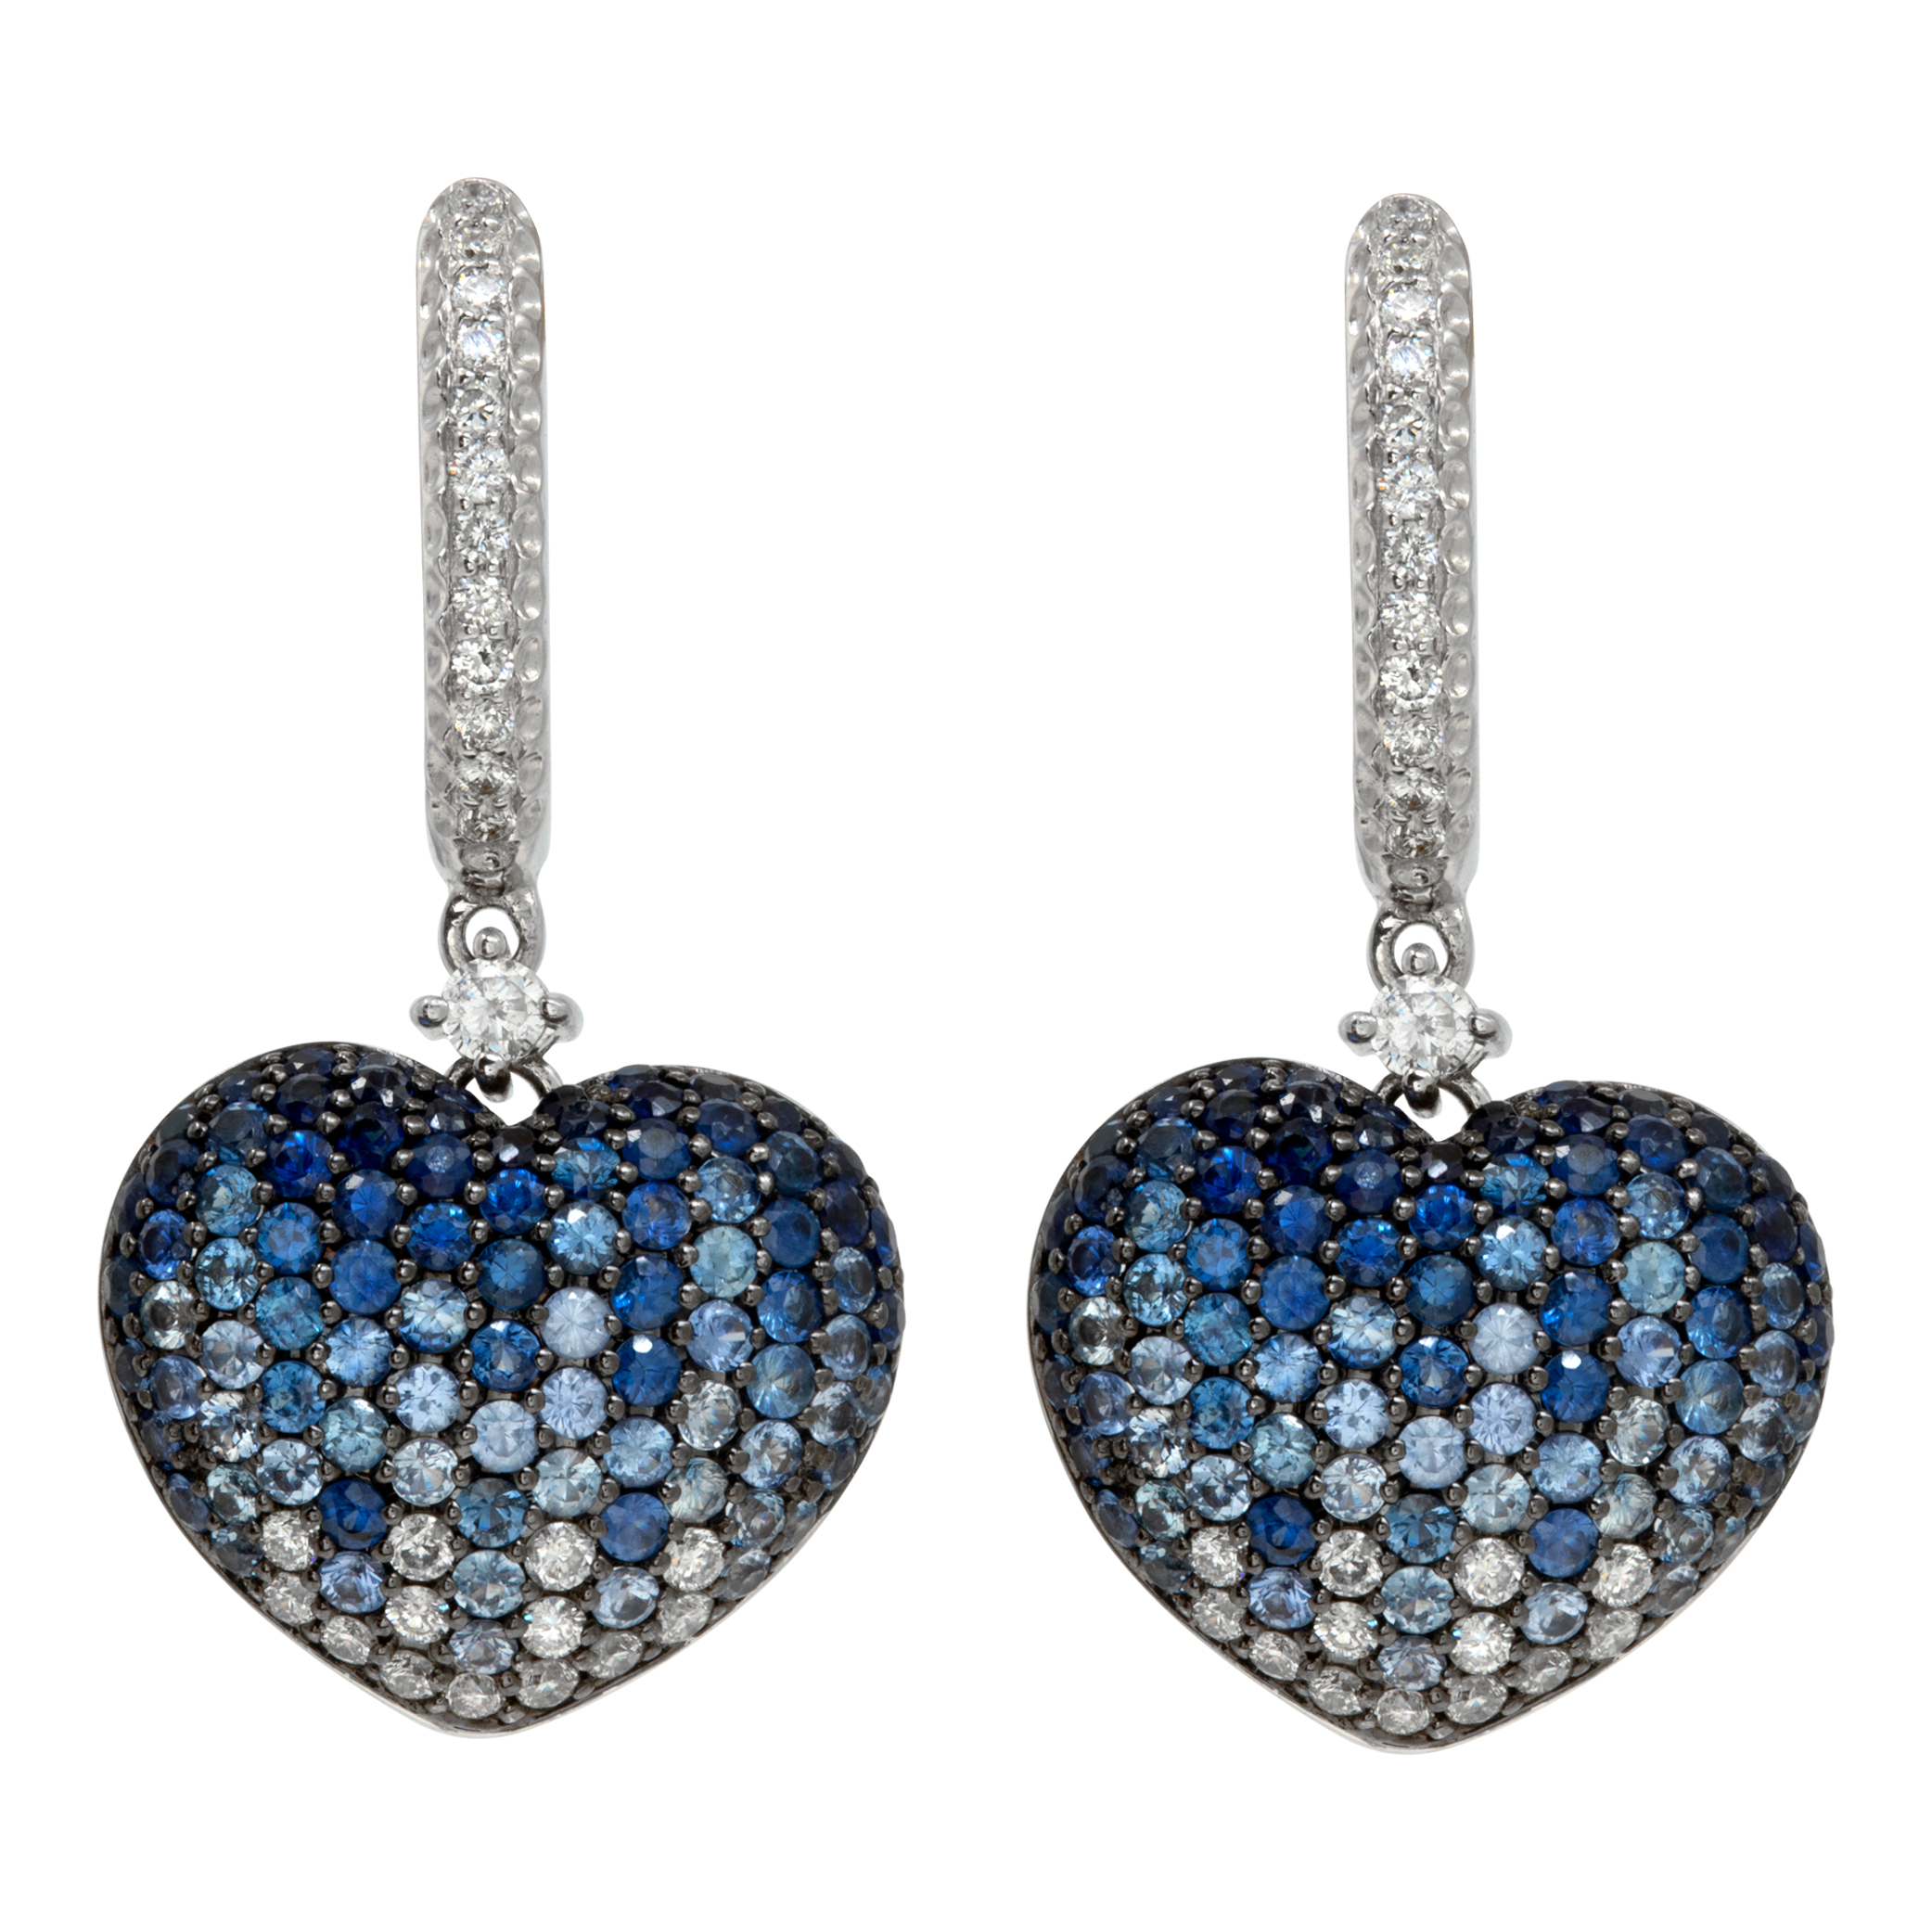 Dangling sapphire & diamond heart earrings in 18k white gold (Stones)